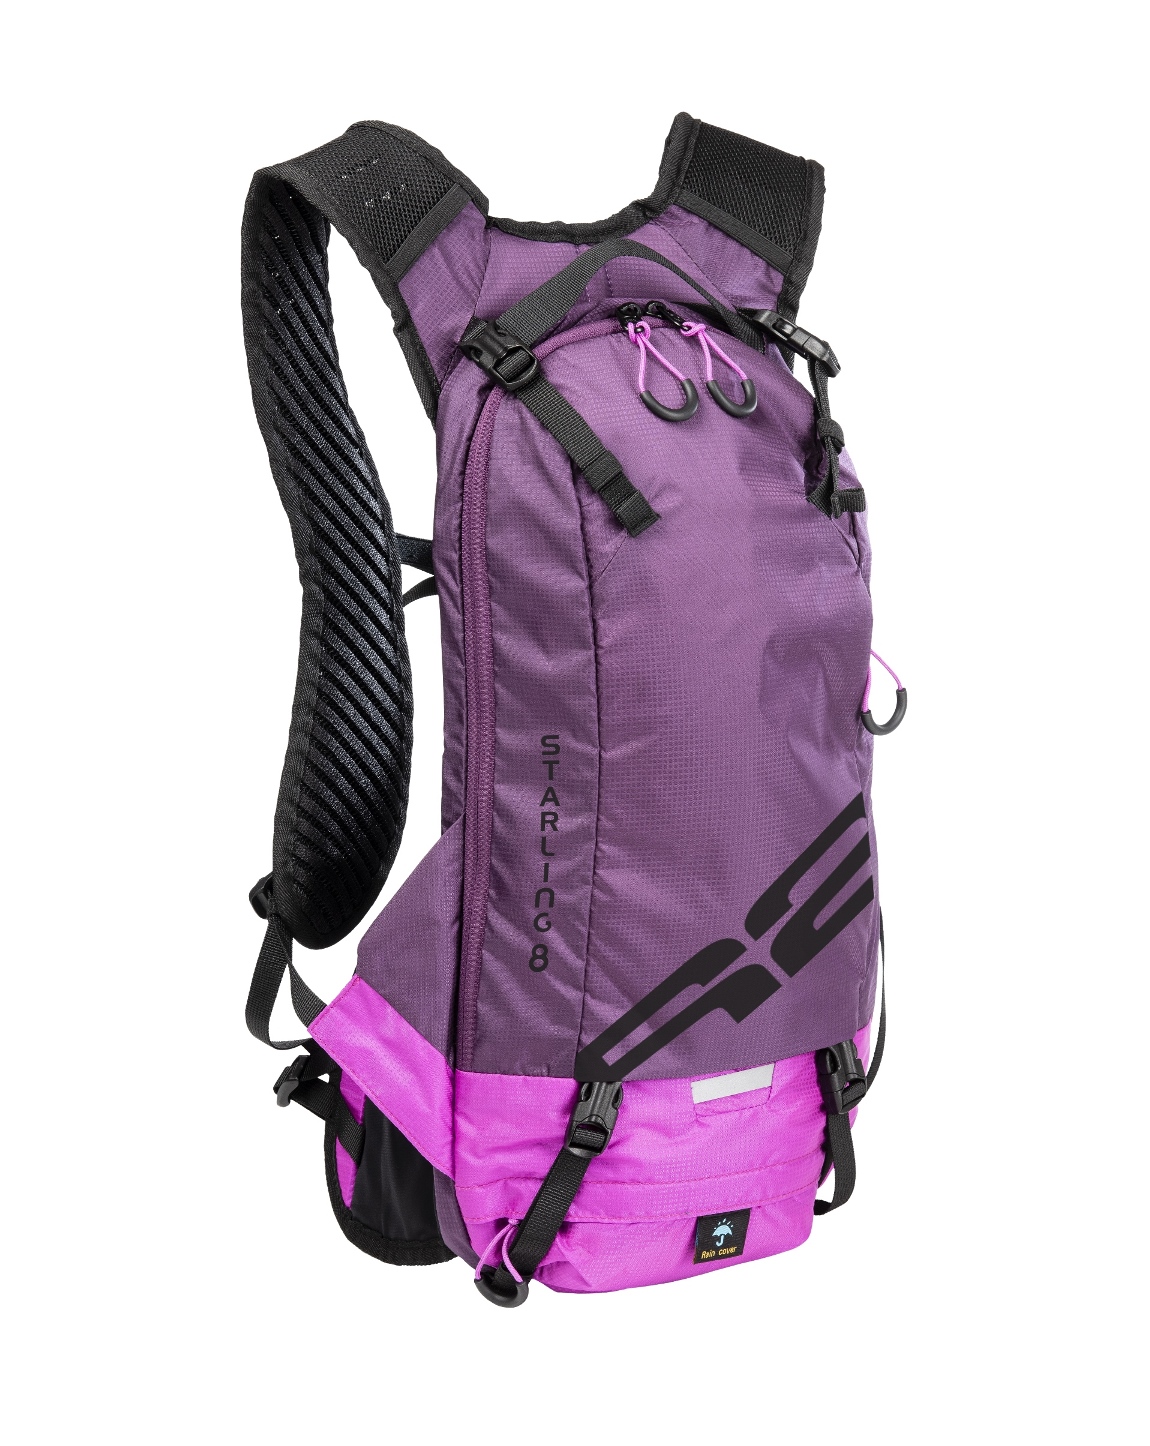 Sport backpack  R2 STARLING ATBP03B 8L